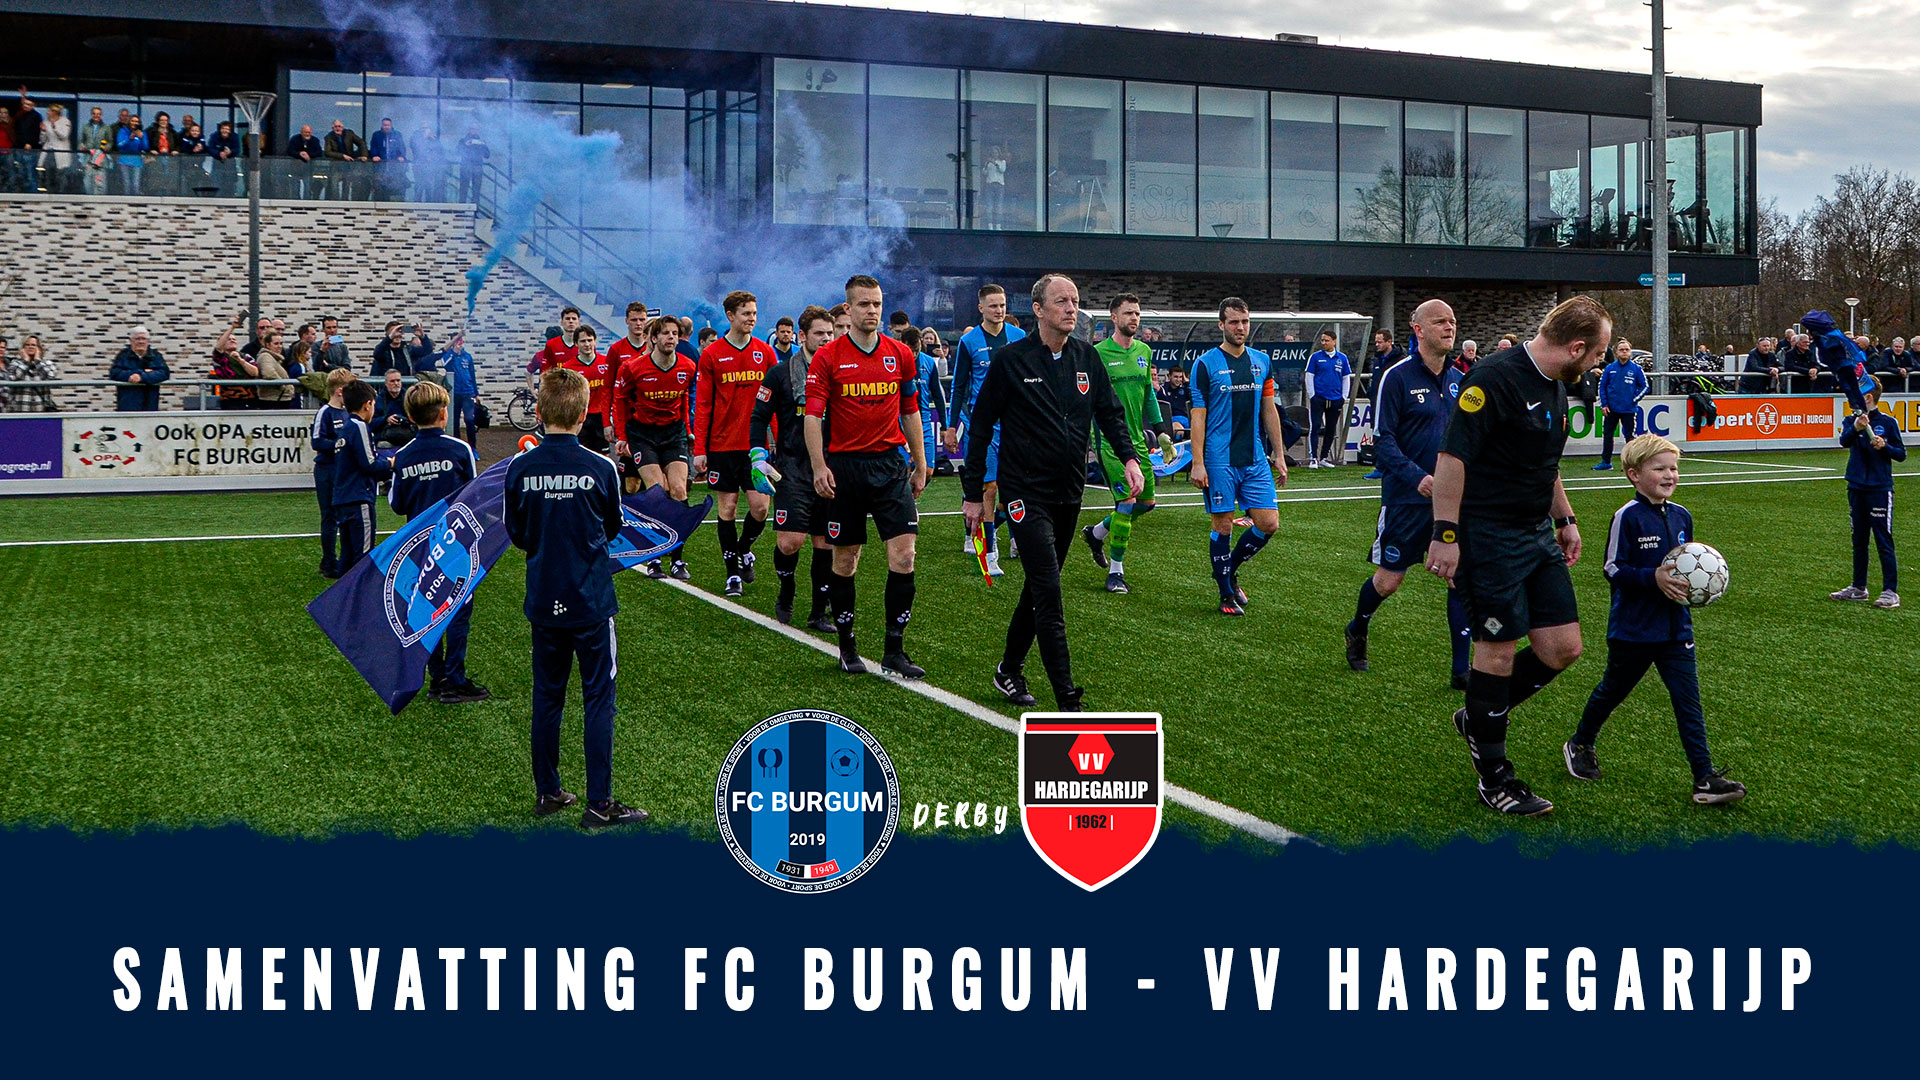 🎥 Samenvatting van de derby FC Burgum - VV Hardegarijp 